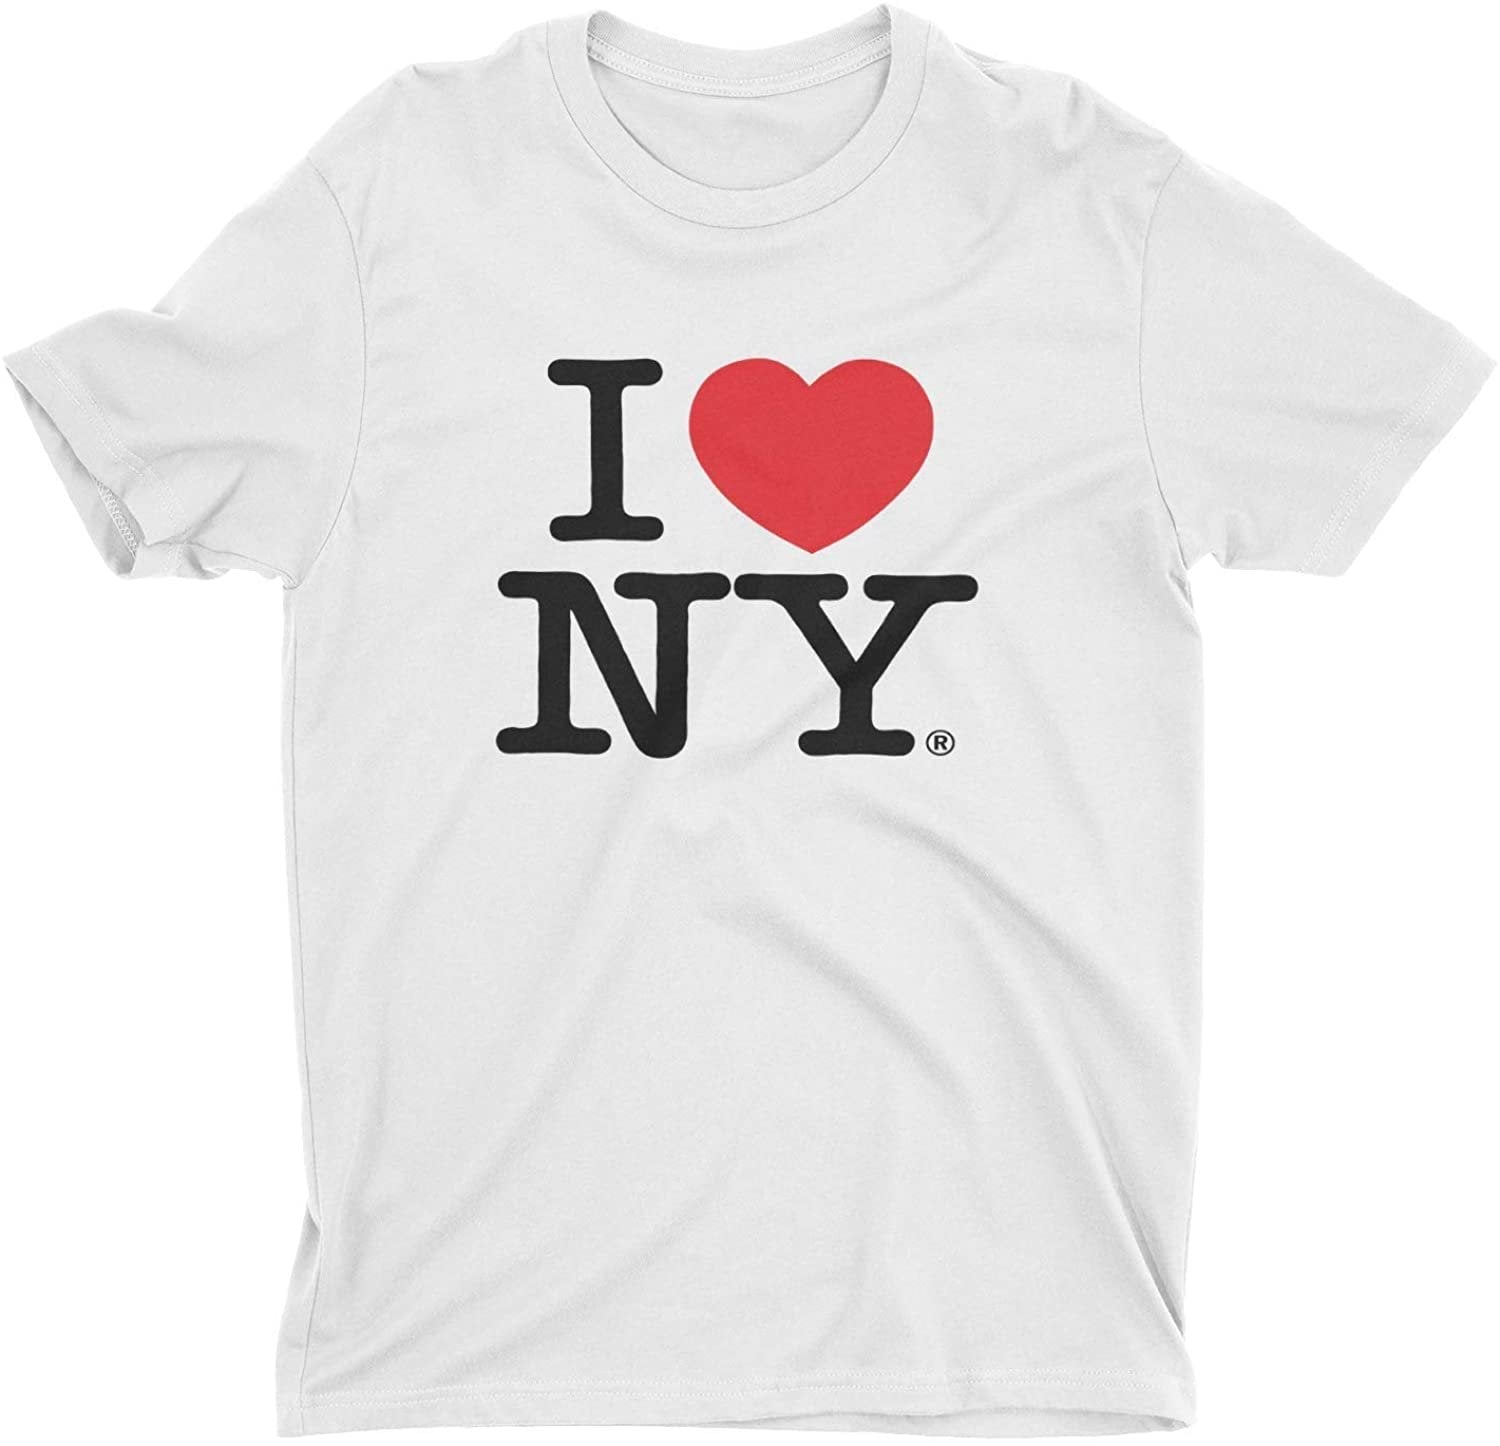 Ich liebe NY Kinder T-Shirt T-Shirt Weiß